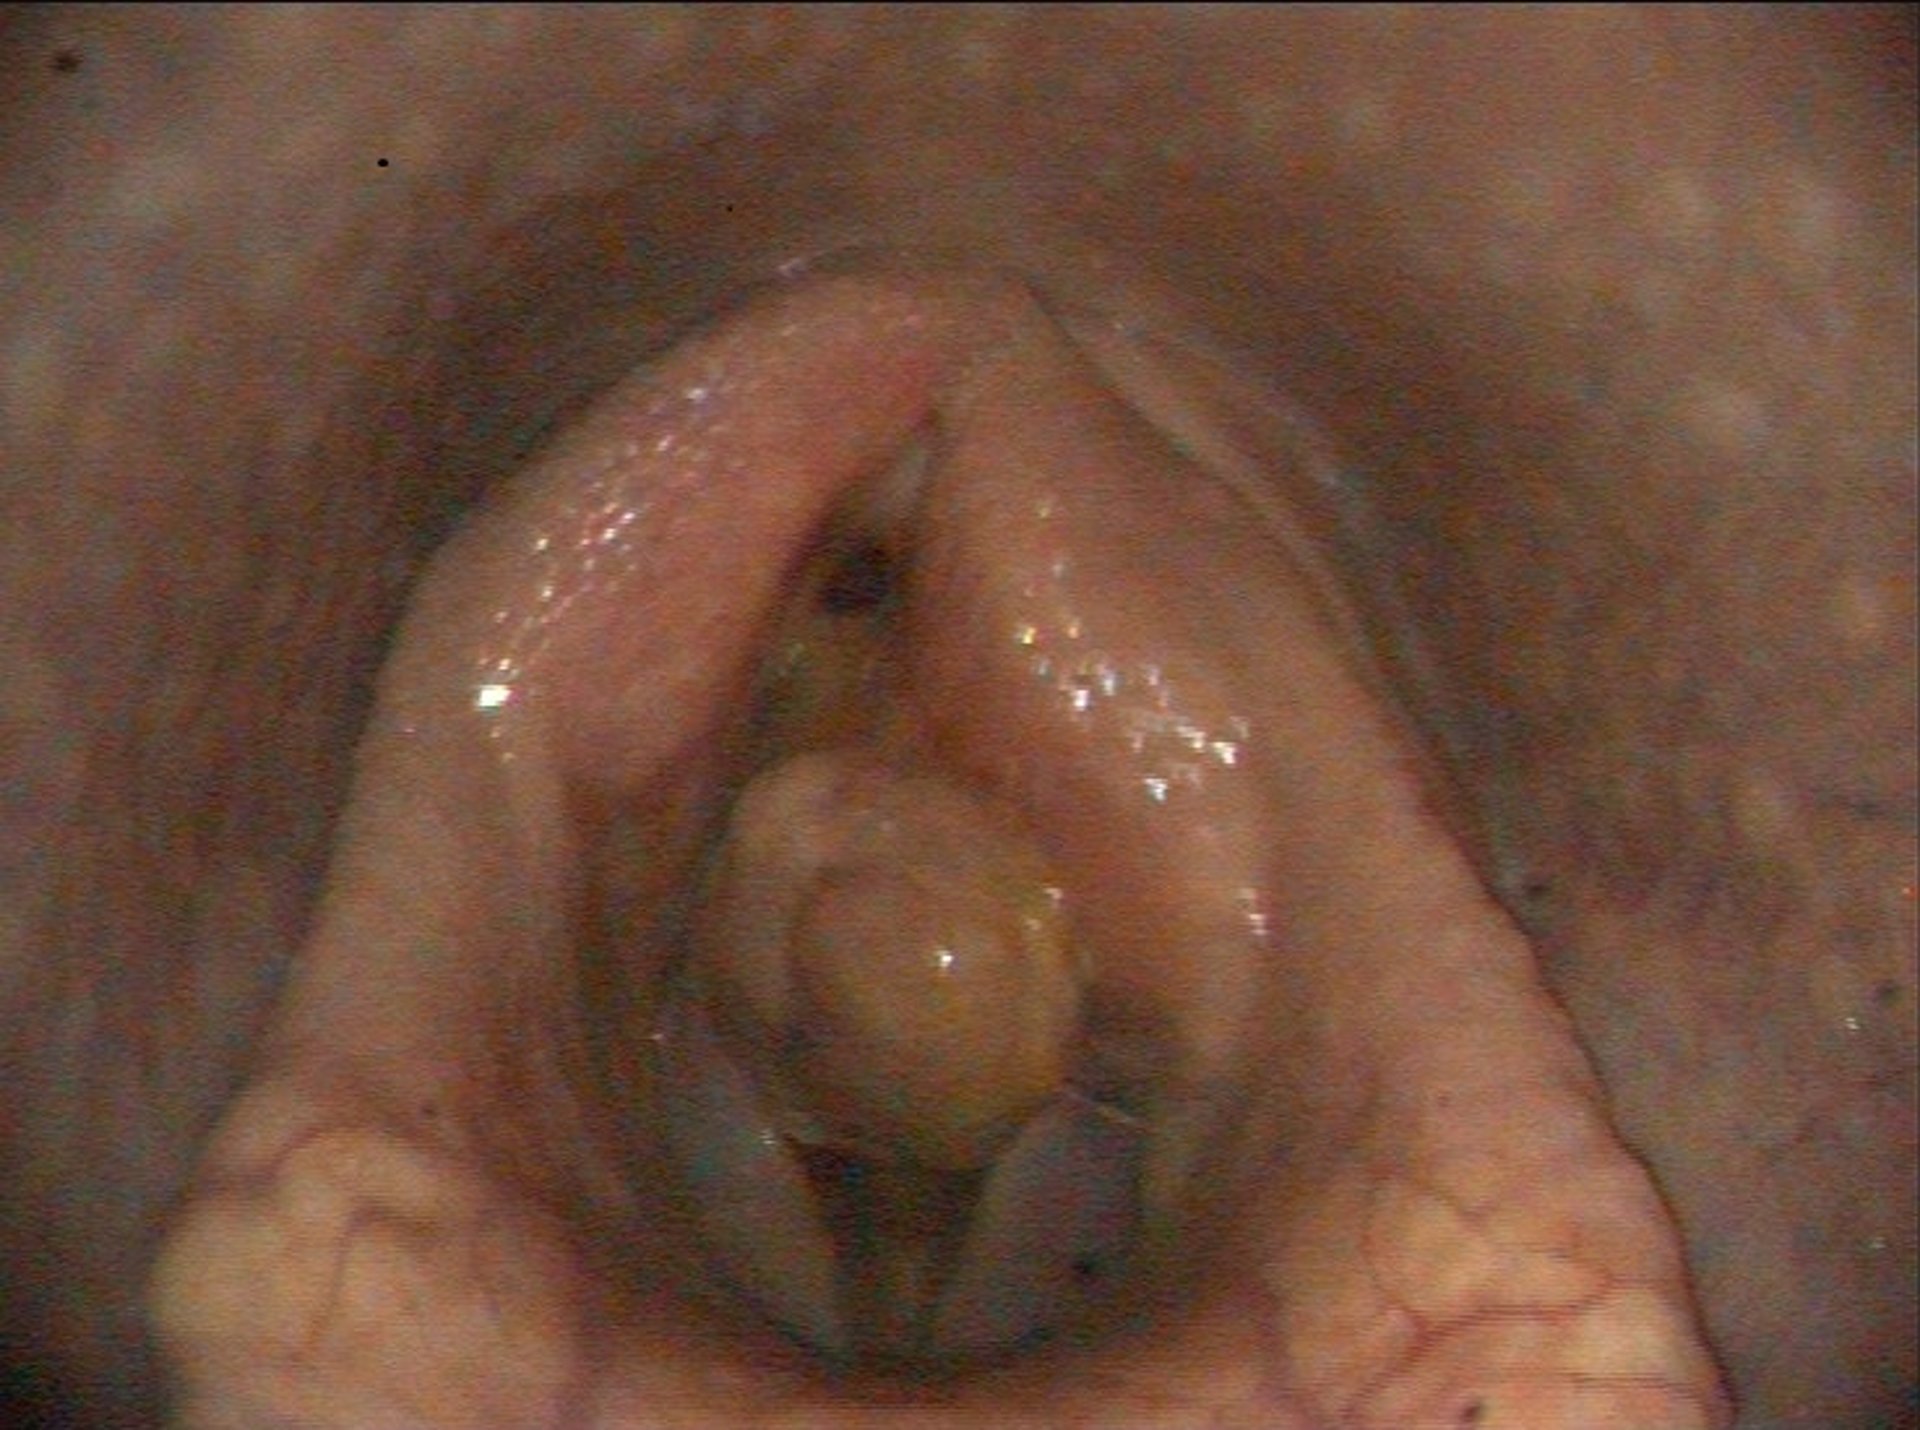 Arytenoid chondritis with granuloma, horse